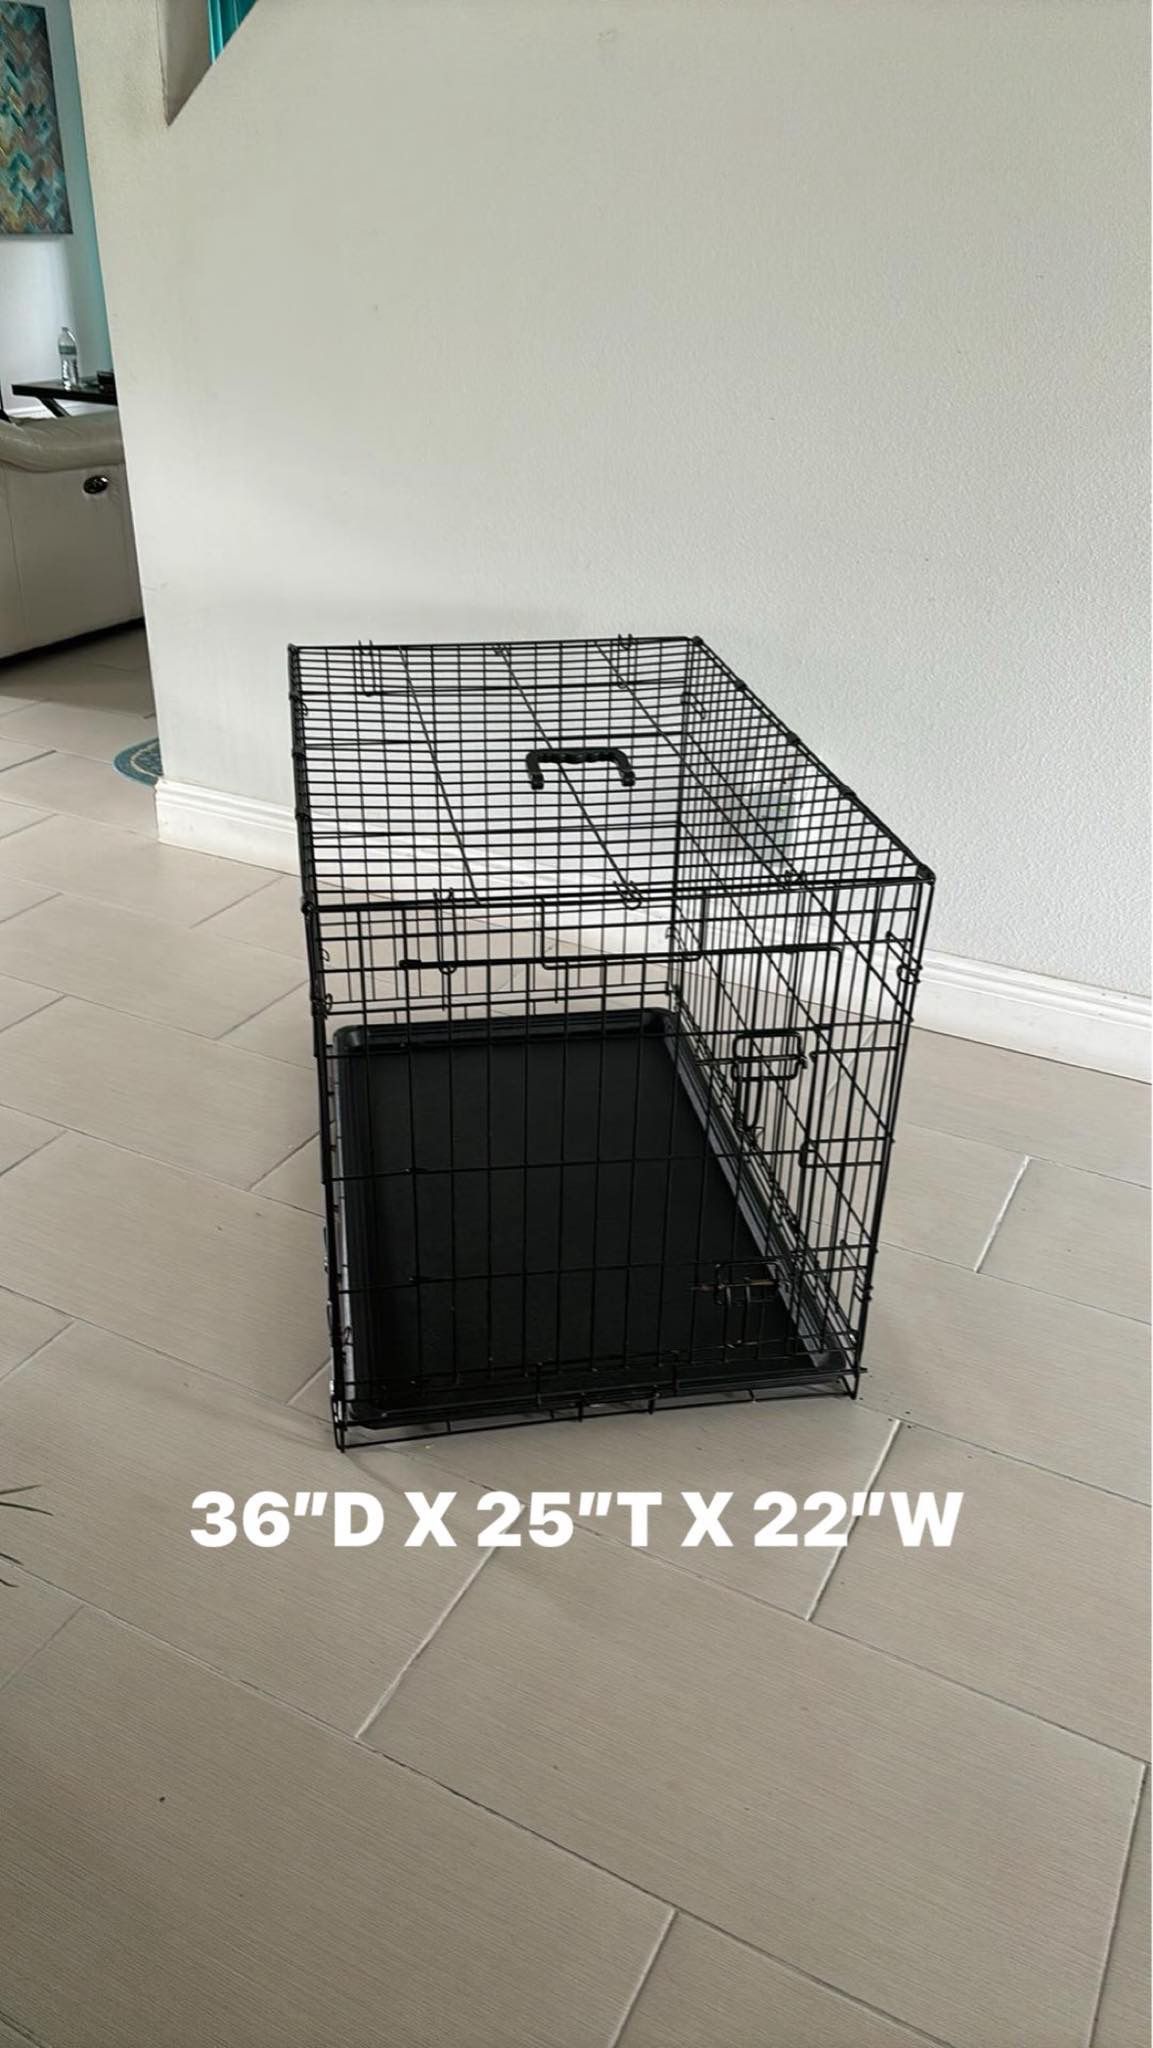 For Large Dog 1 Door Folding Dog Crate Size 36”Lx